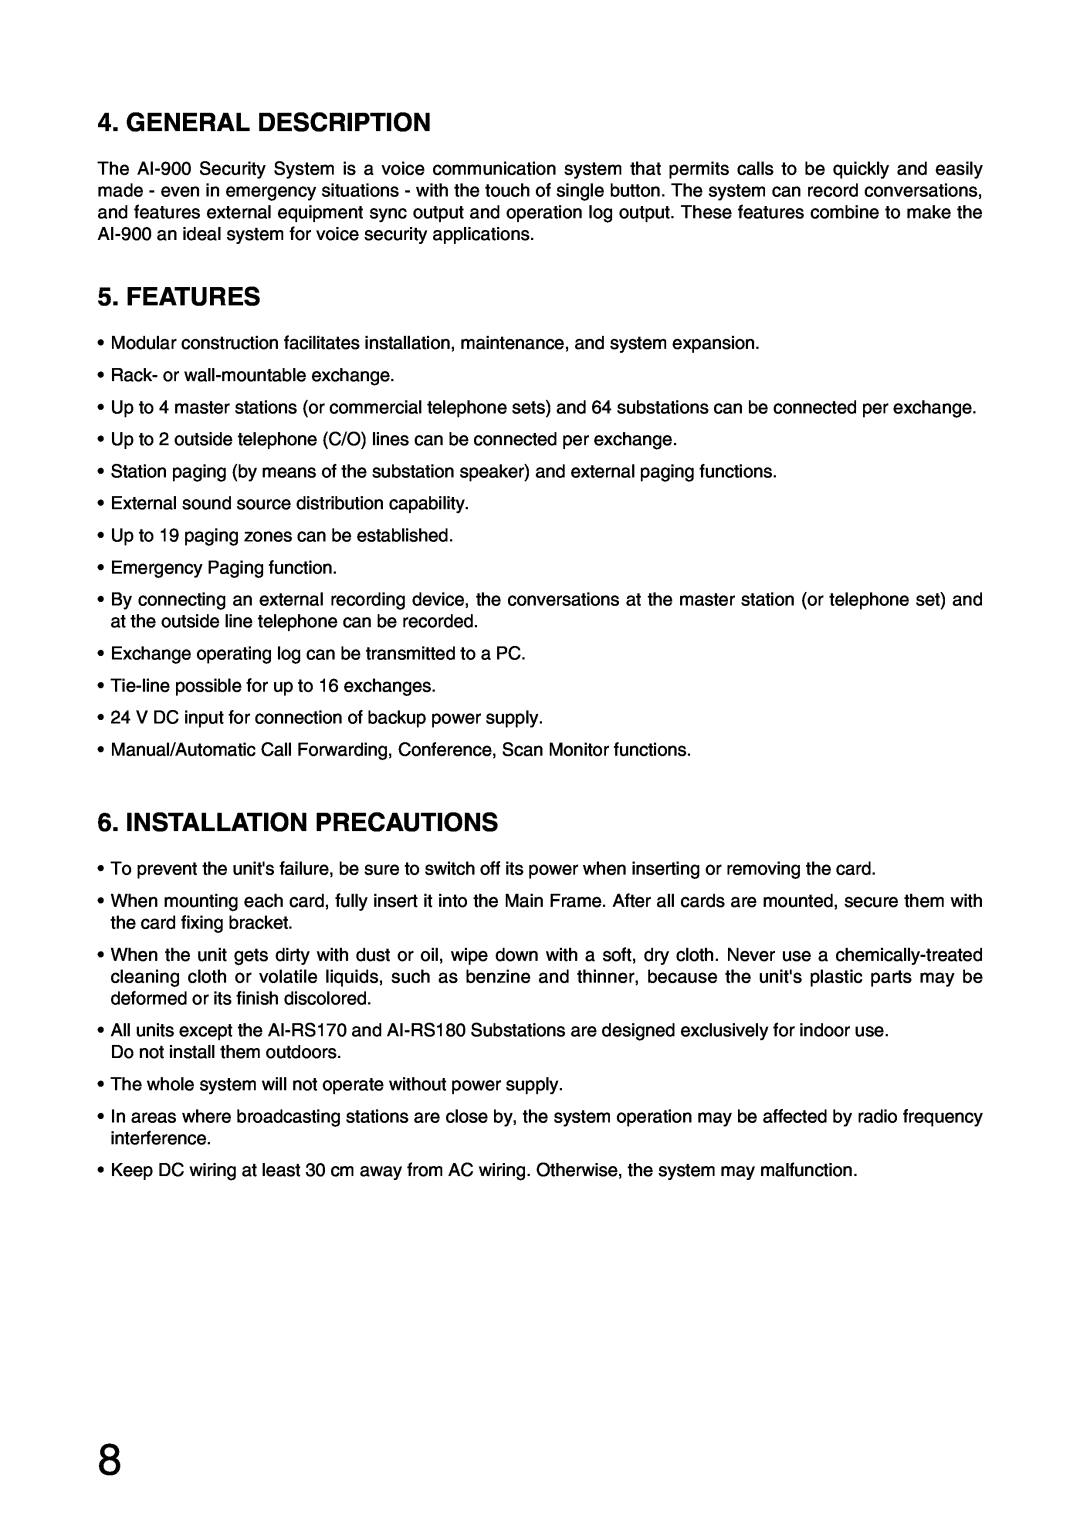 Aiphone AI-900 installation manual General Description, Features, Installation Precautions 